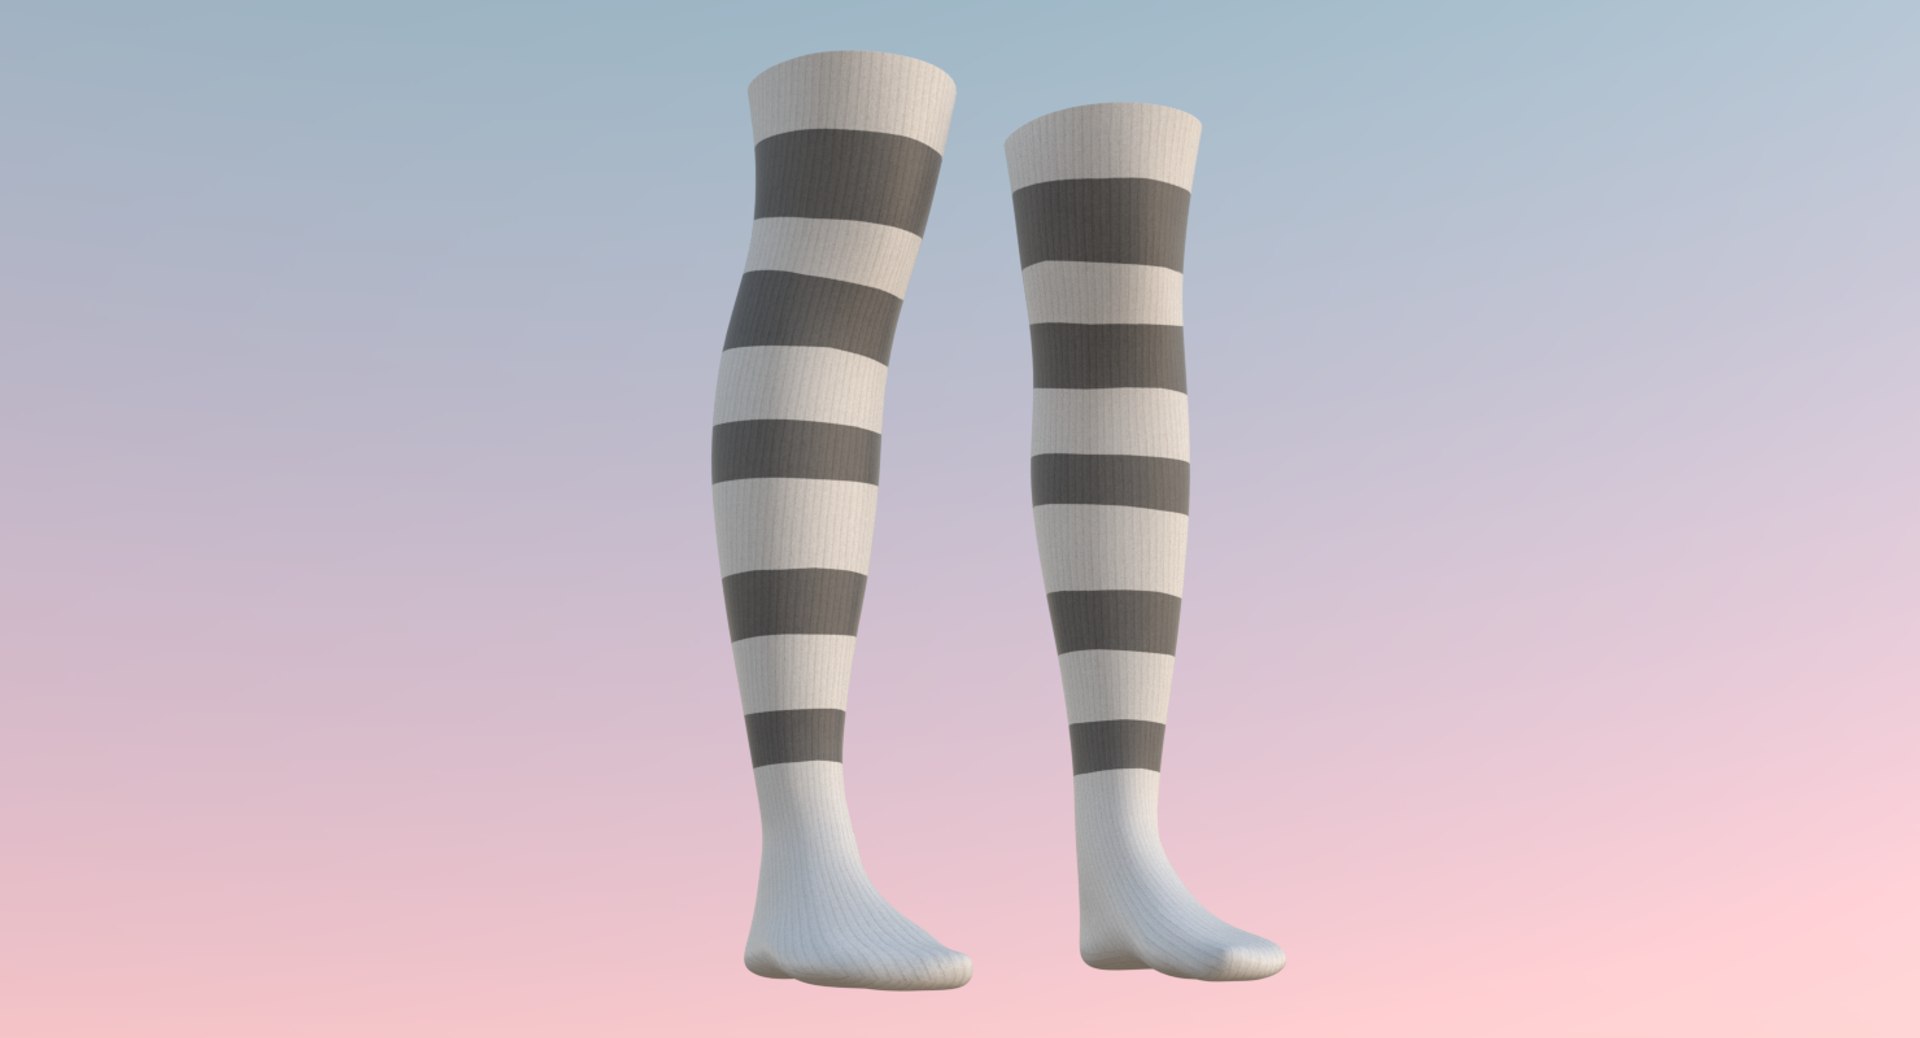 Knee socks 1 3D model - TurboSquid 1180337